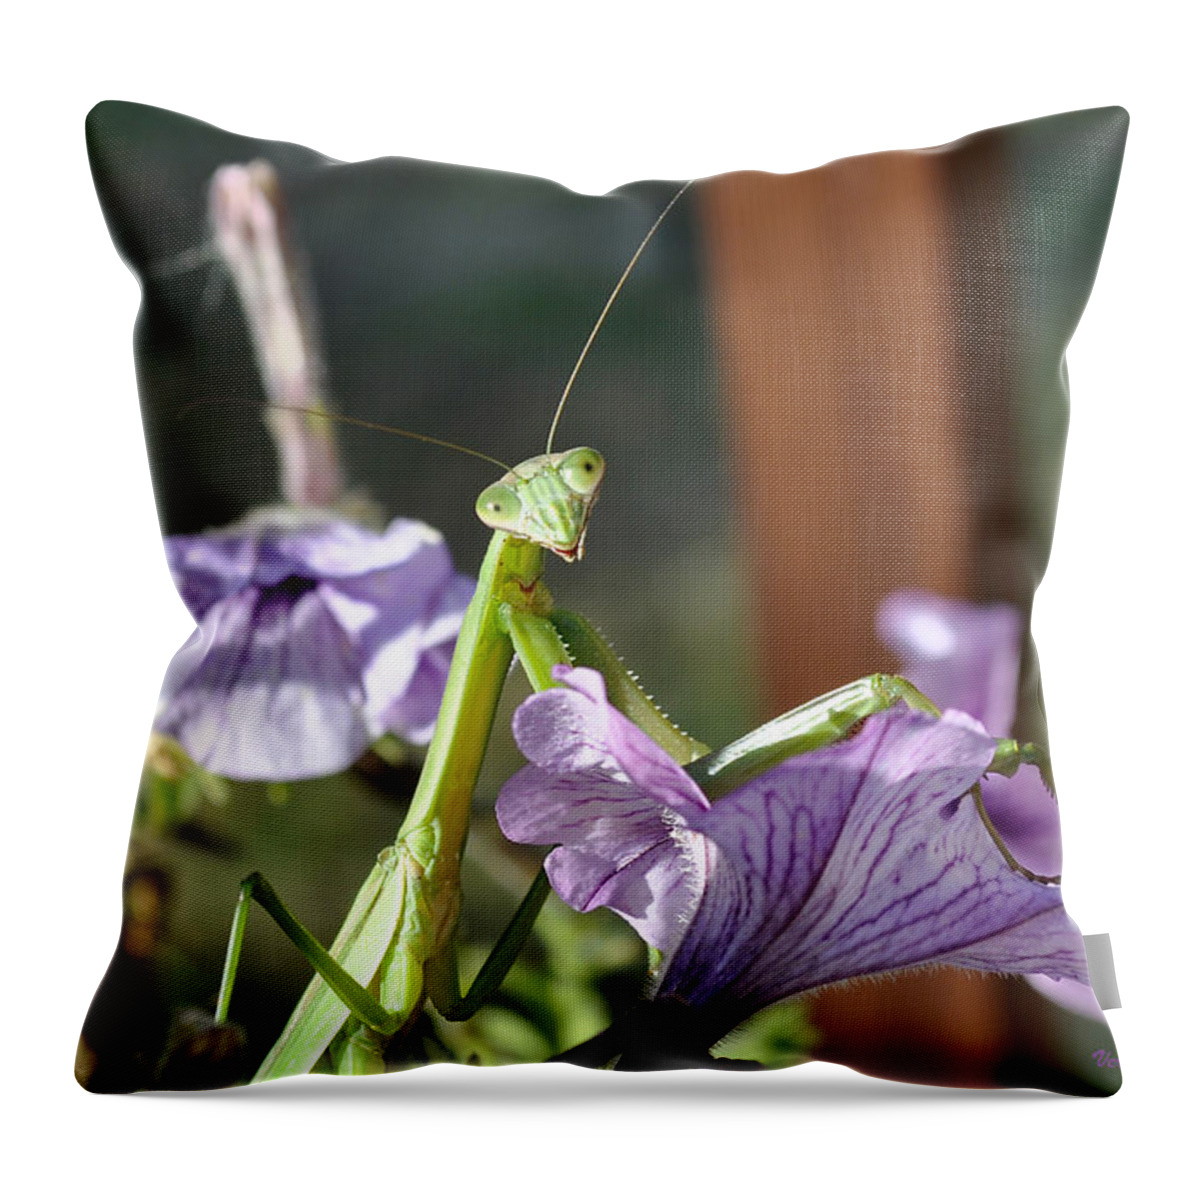 Praying Mantis Throw Pillow featuring the photograph An Autumn Surprise by Verana Stark